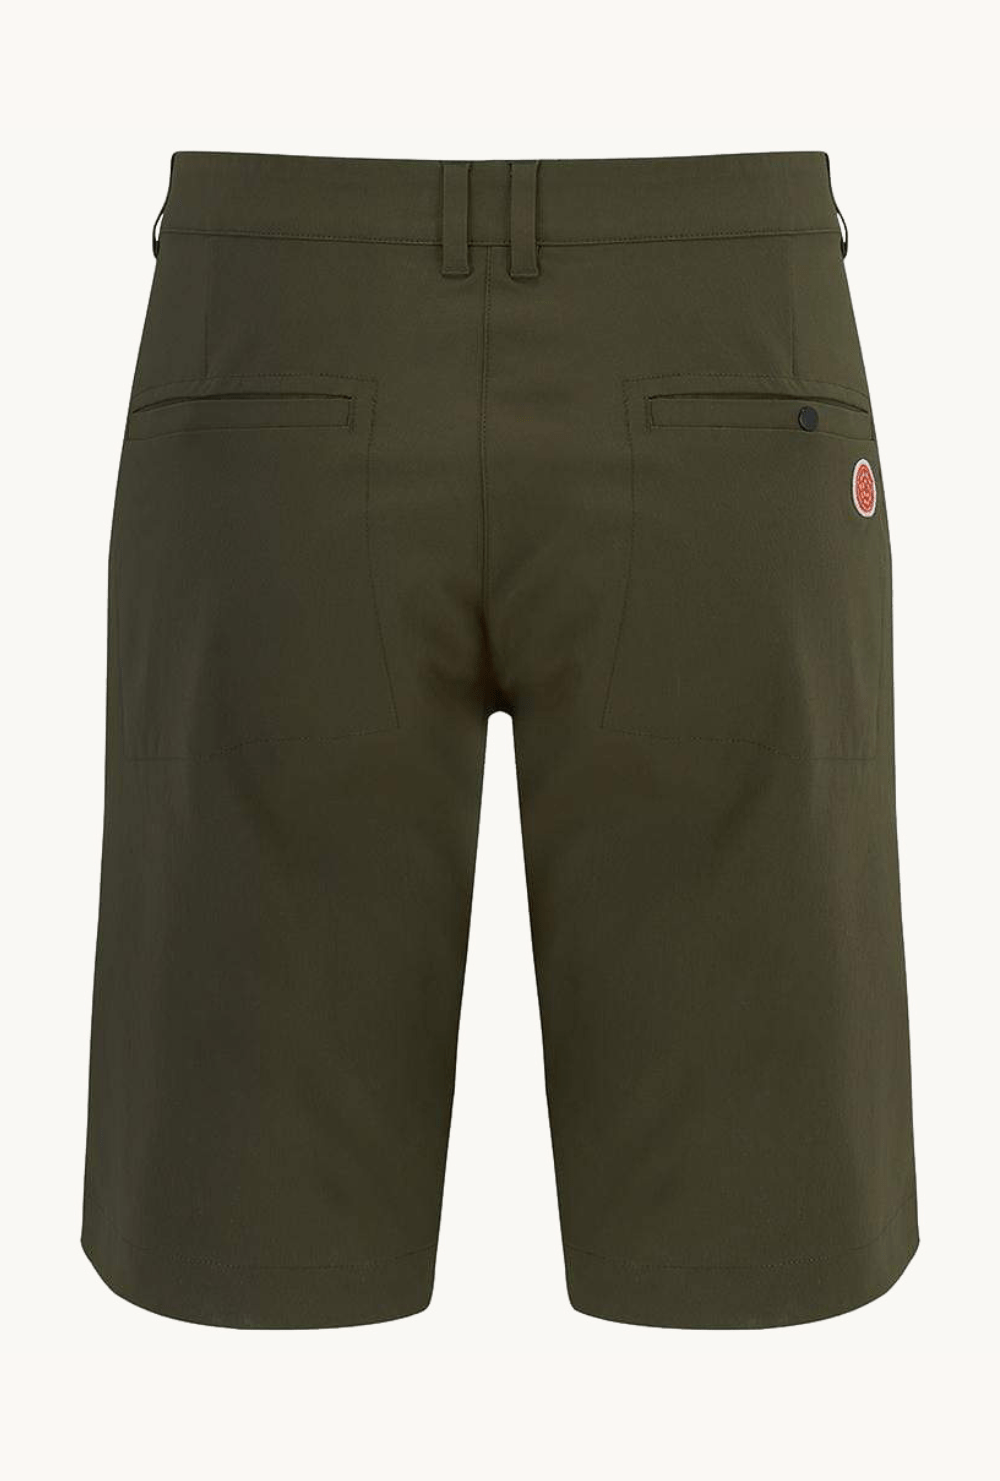 Pearson 1860  Kick Back - Urban Commuter Shorts Olive  X-large 36 / Olive